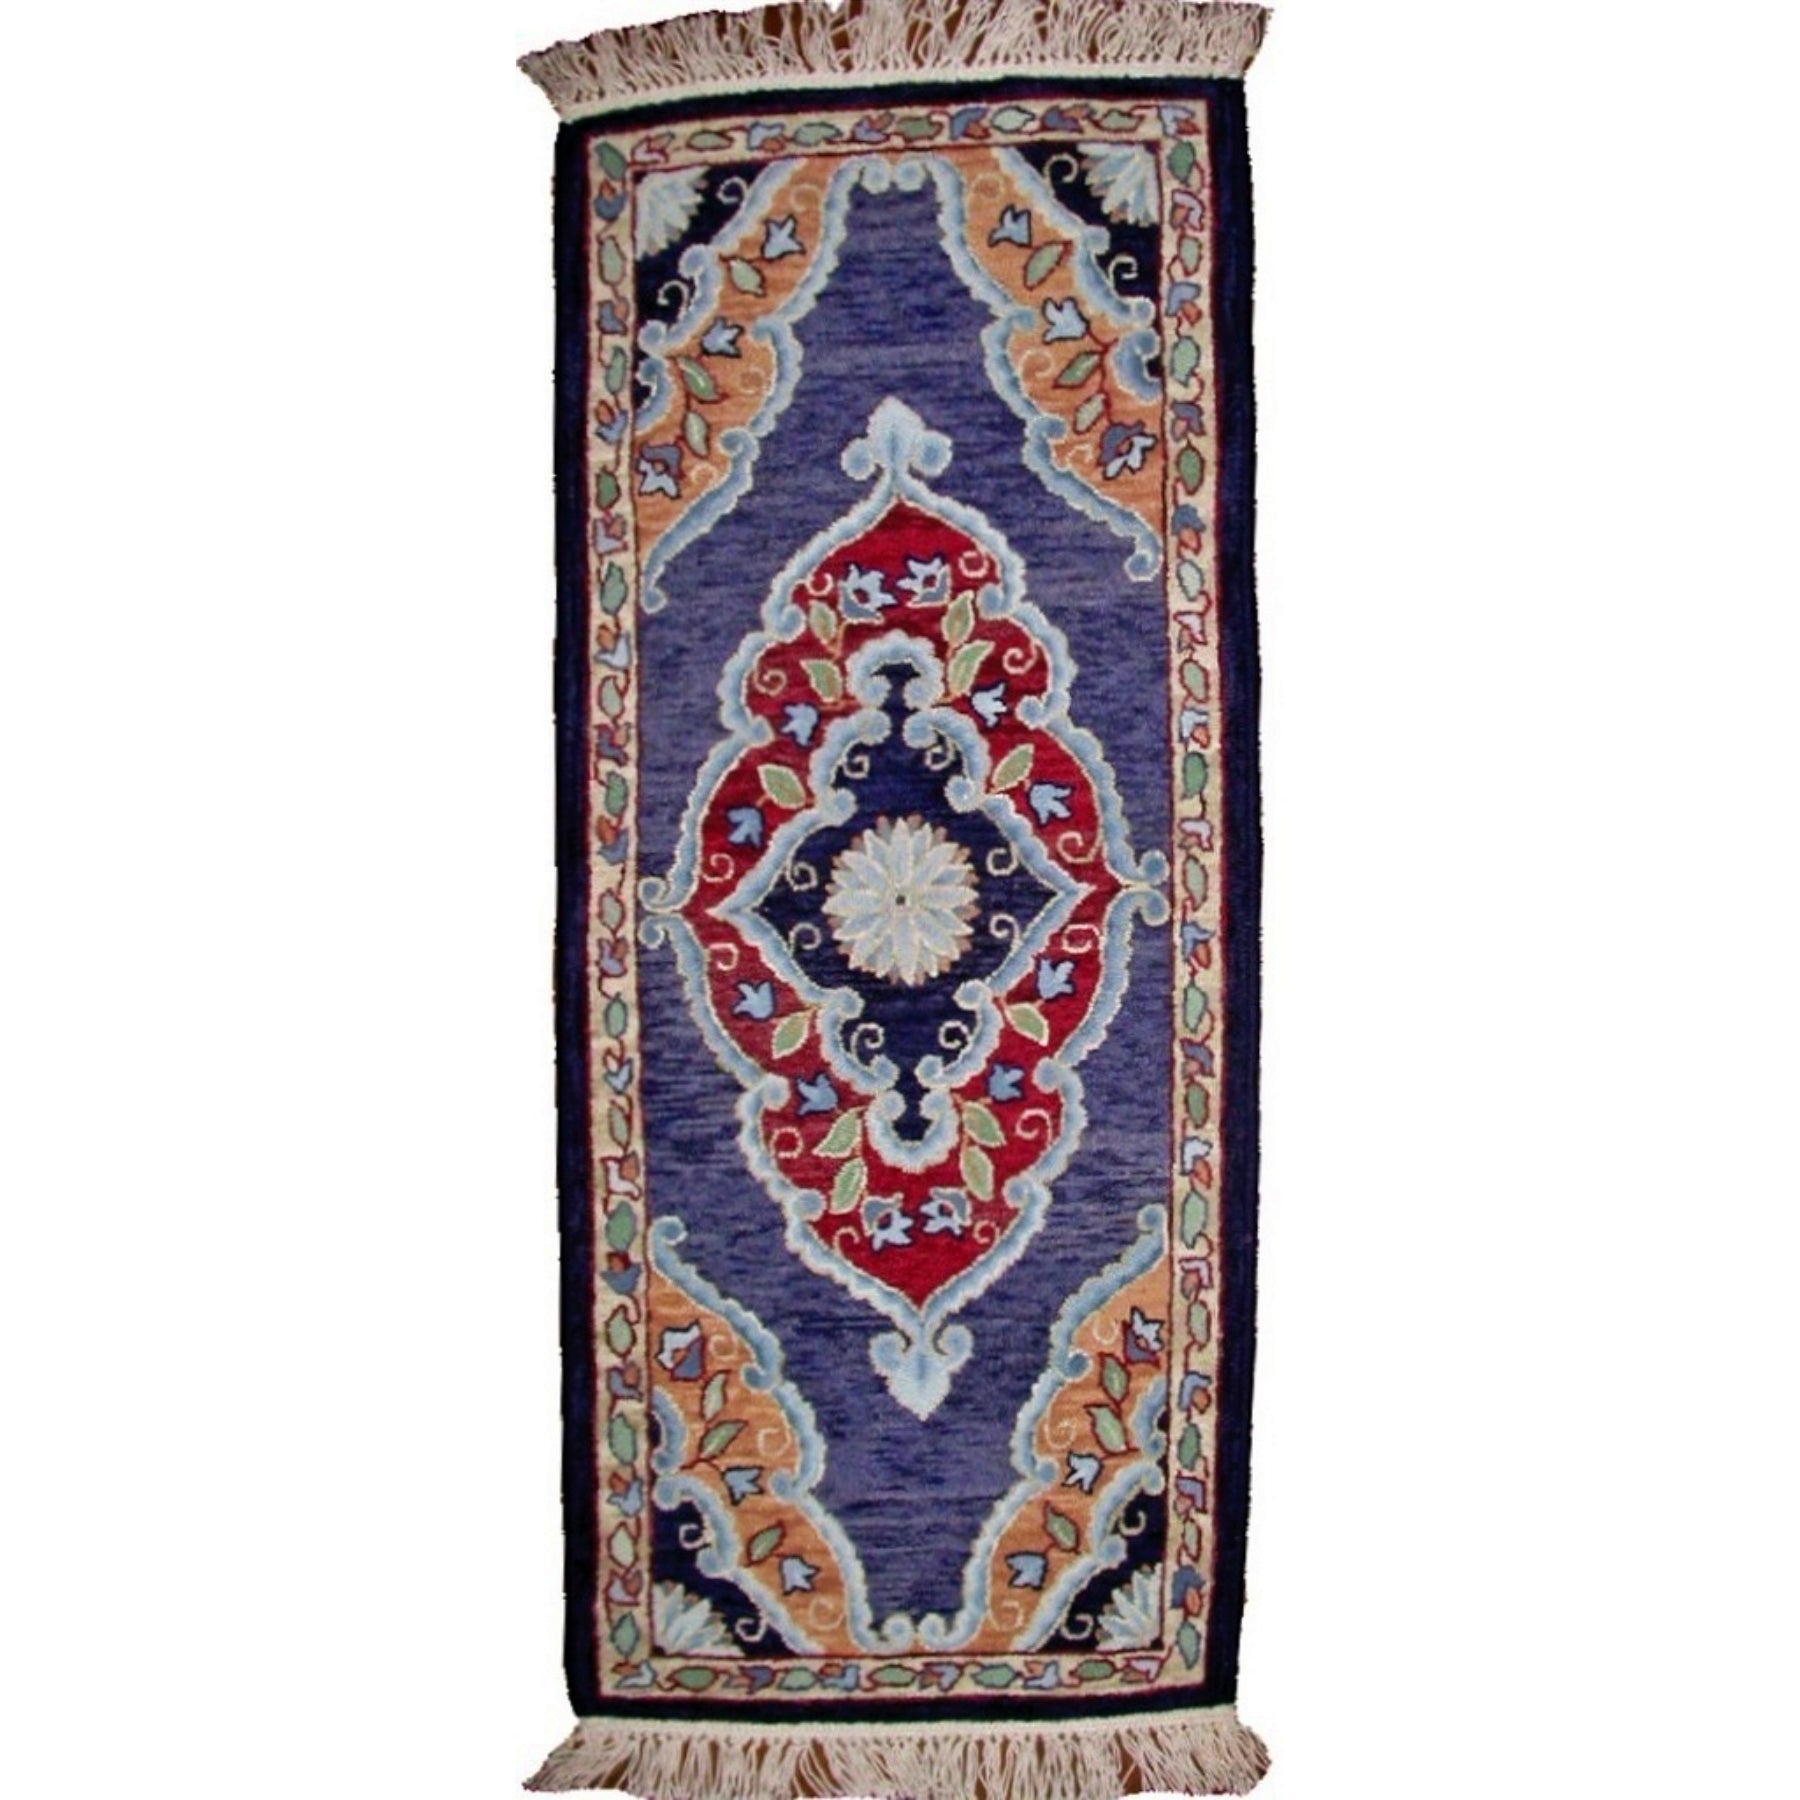 Kerman Bench, rug hooked by Elizabeth Marino